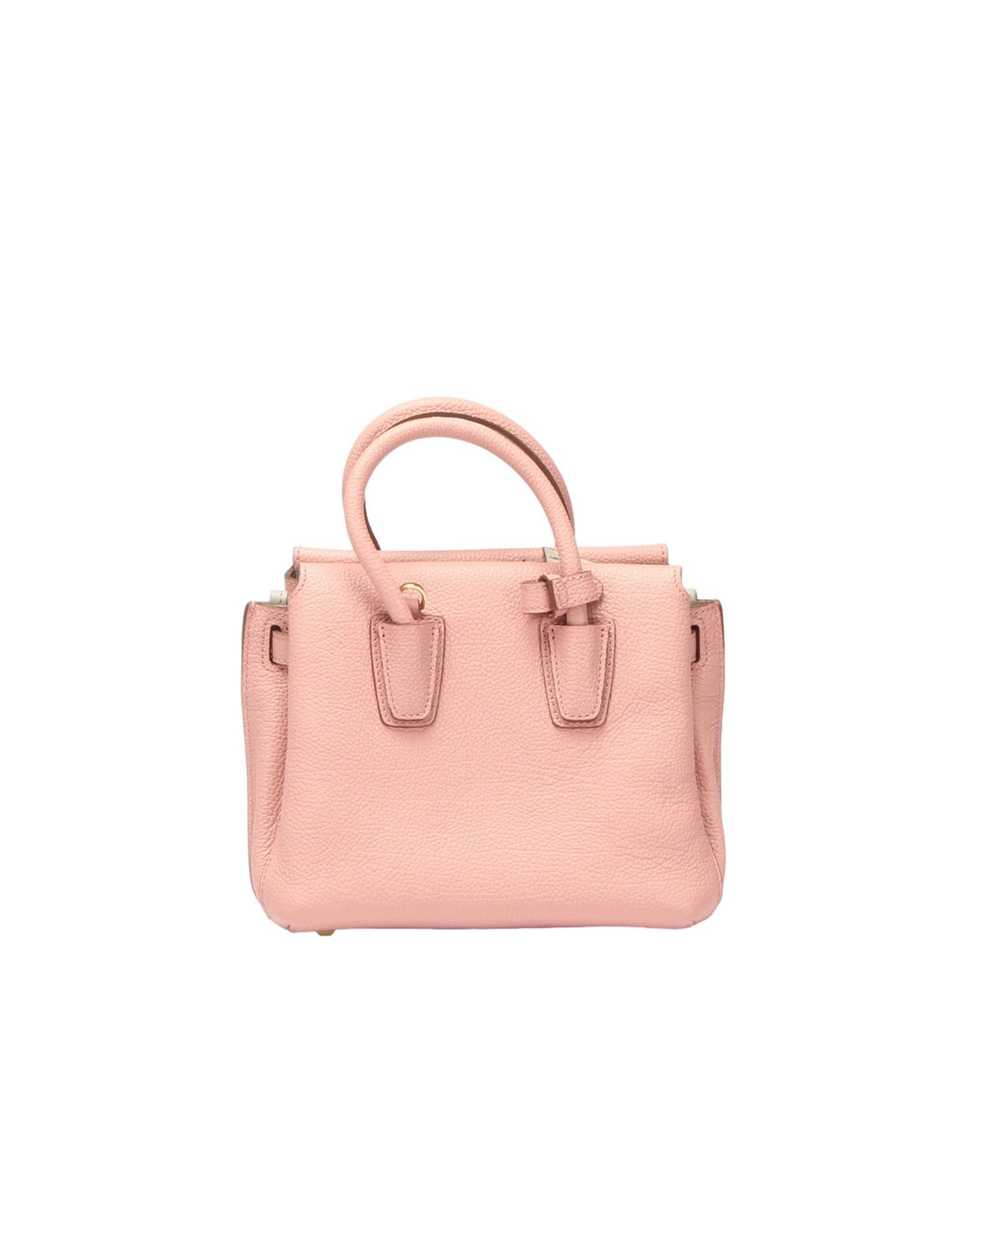 MCM Lightly Worn Pink Mini Tote Bag - image 6